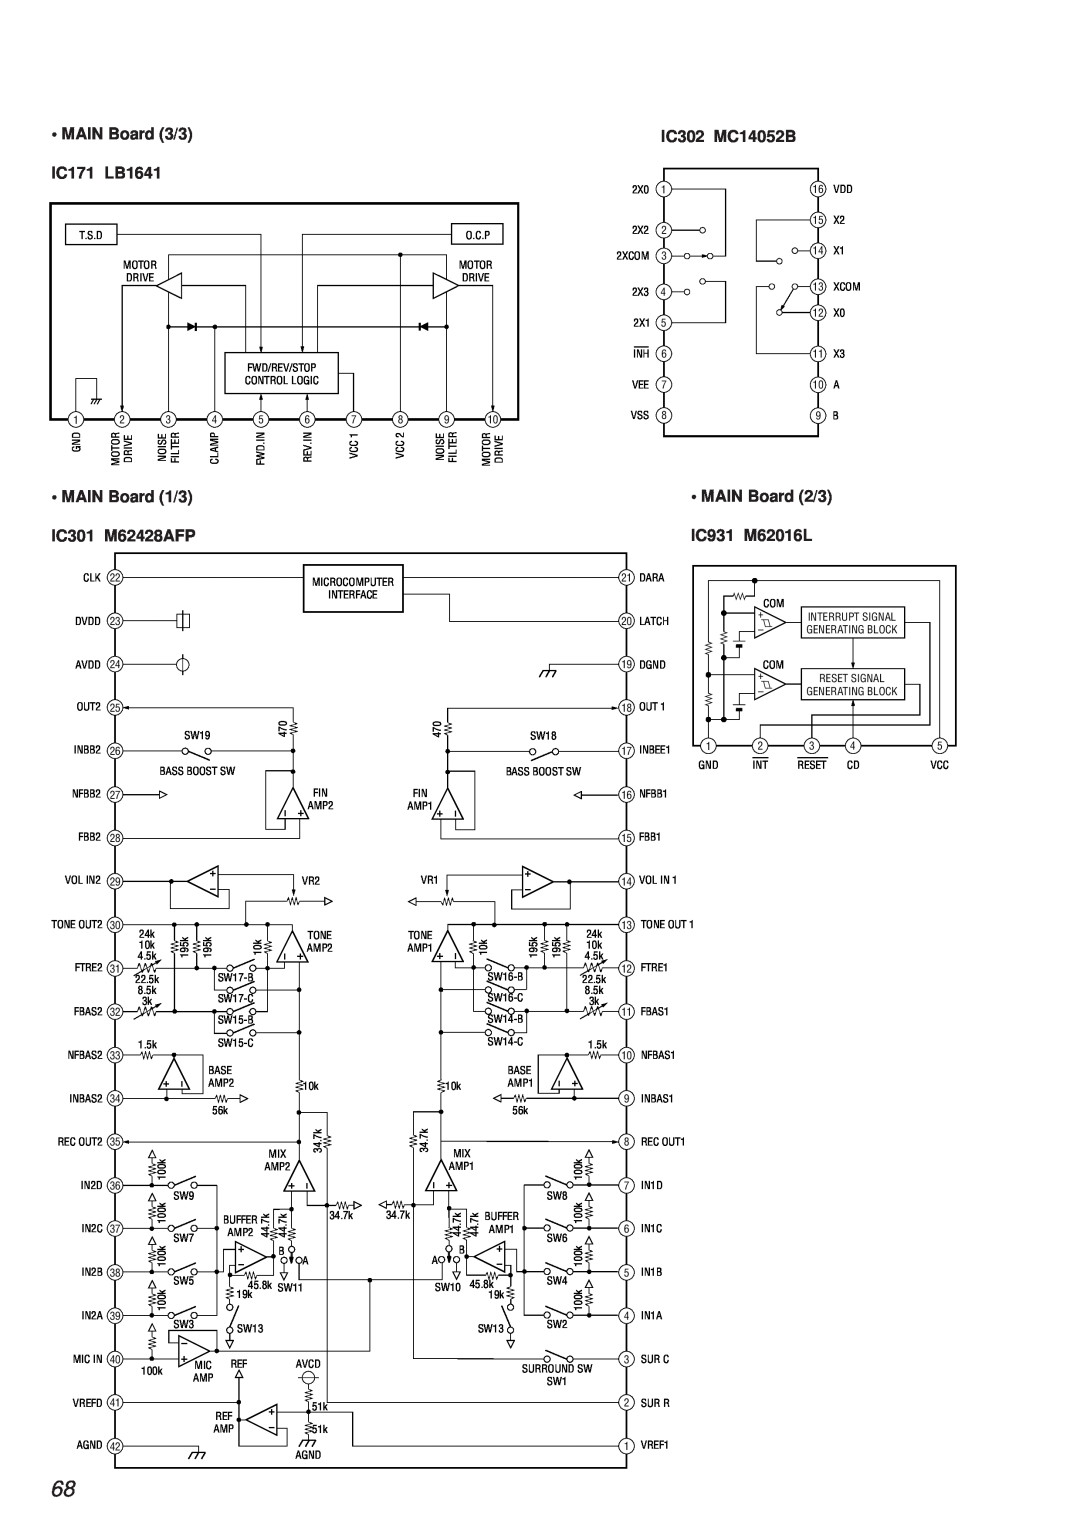 Sony HCD-MD373 MAIN Board 3/3, IC171 LB1641, • MAIN Board 1/3, IC302 MC14052B, • MAIN Board 2/3, IC301 M62428AFP 